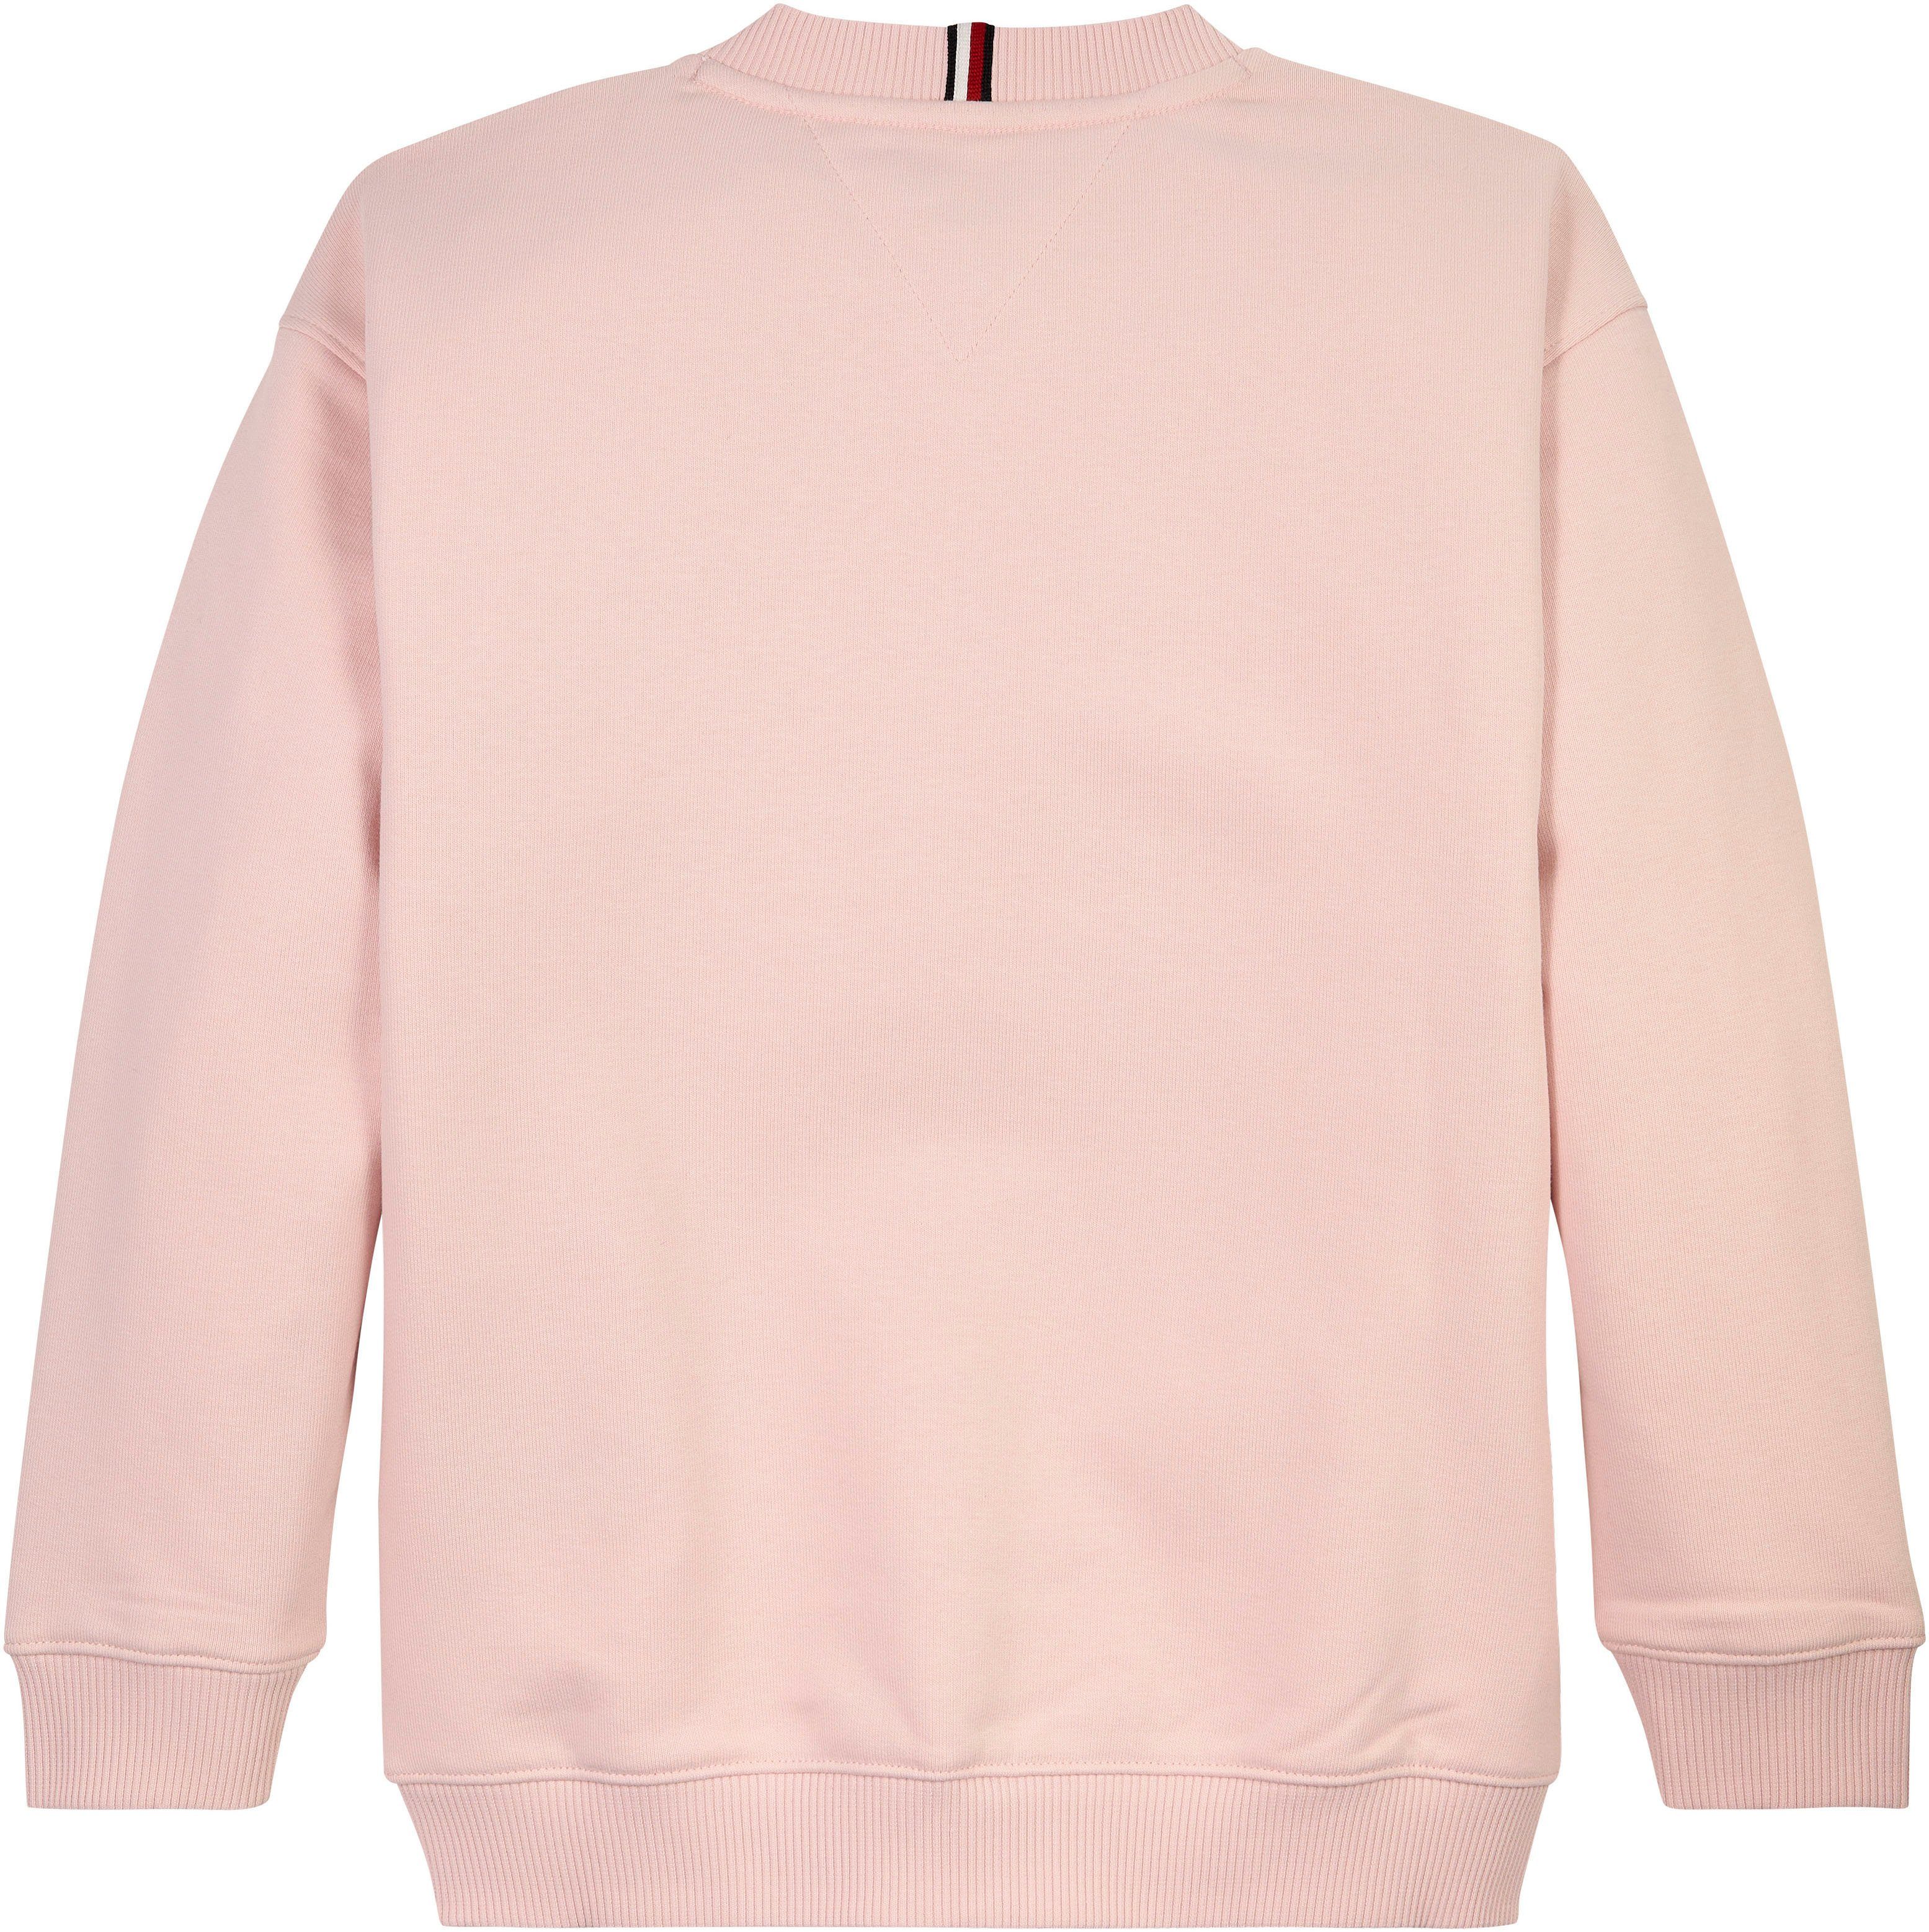 Tommy Hilfiger U TIMELESS in SWEATSHIRT Unifarbe Pink Sweatshirt Whimsy